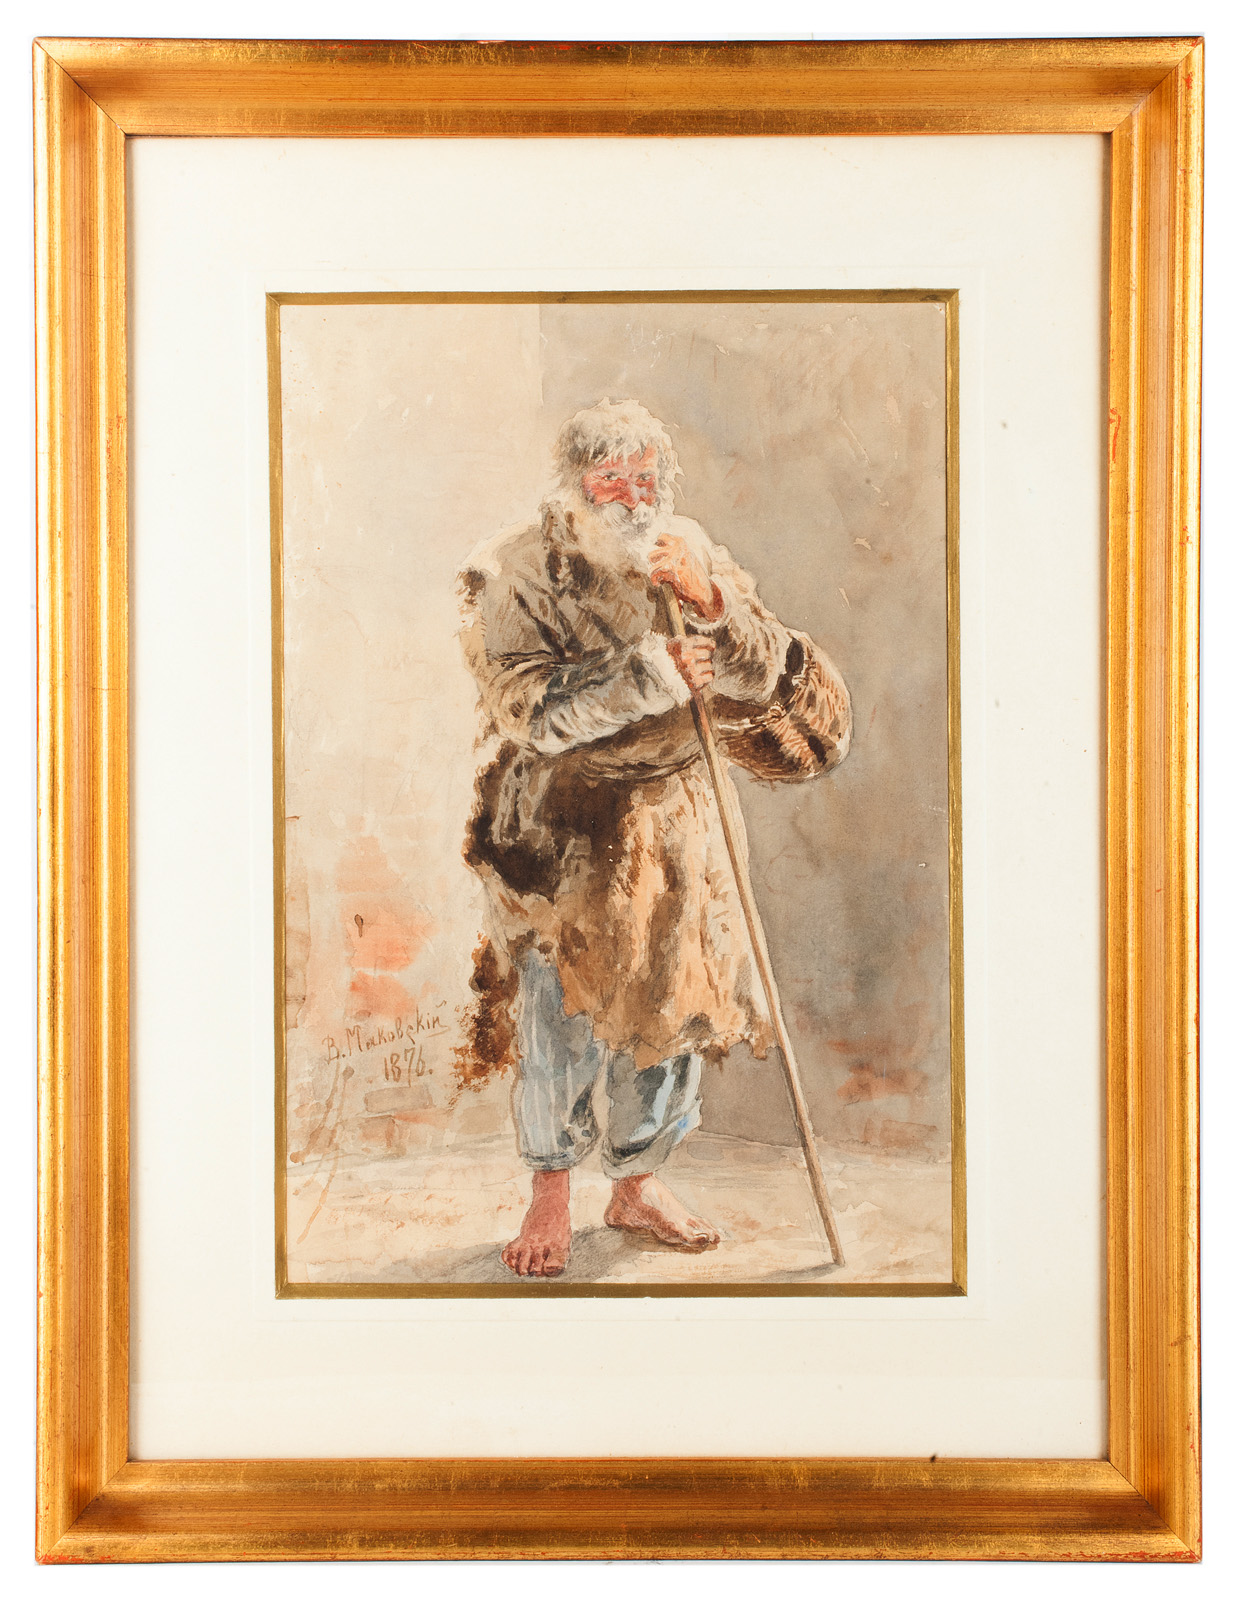 Unknown Artist. An Old Peasant. - landofmagazines.com